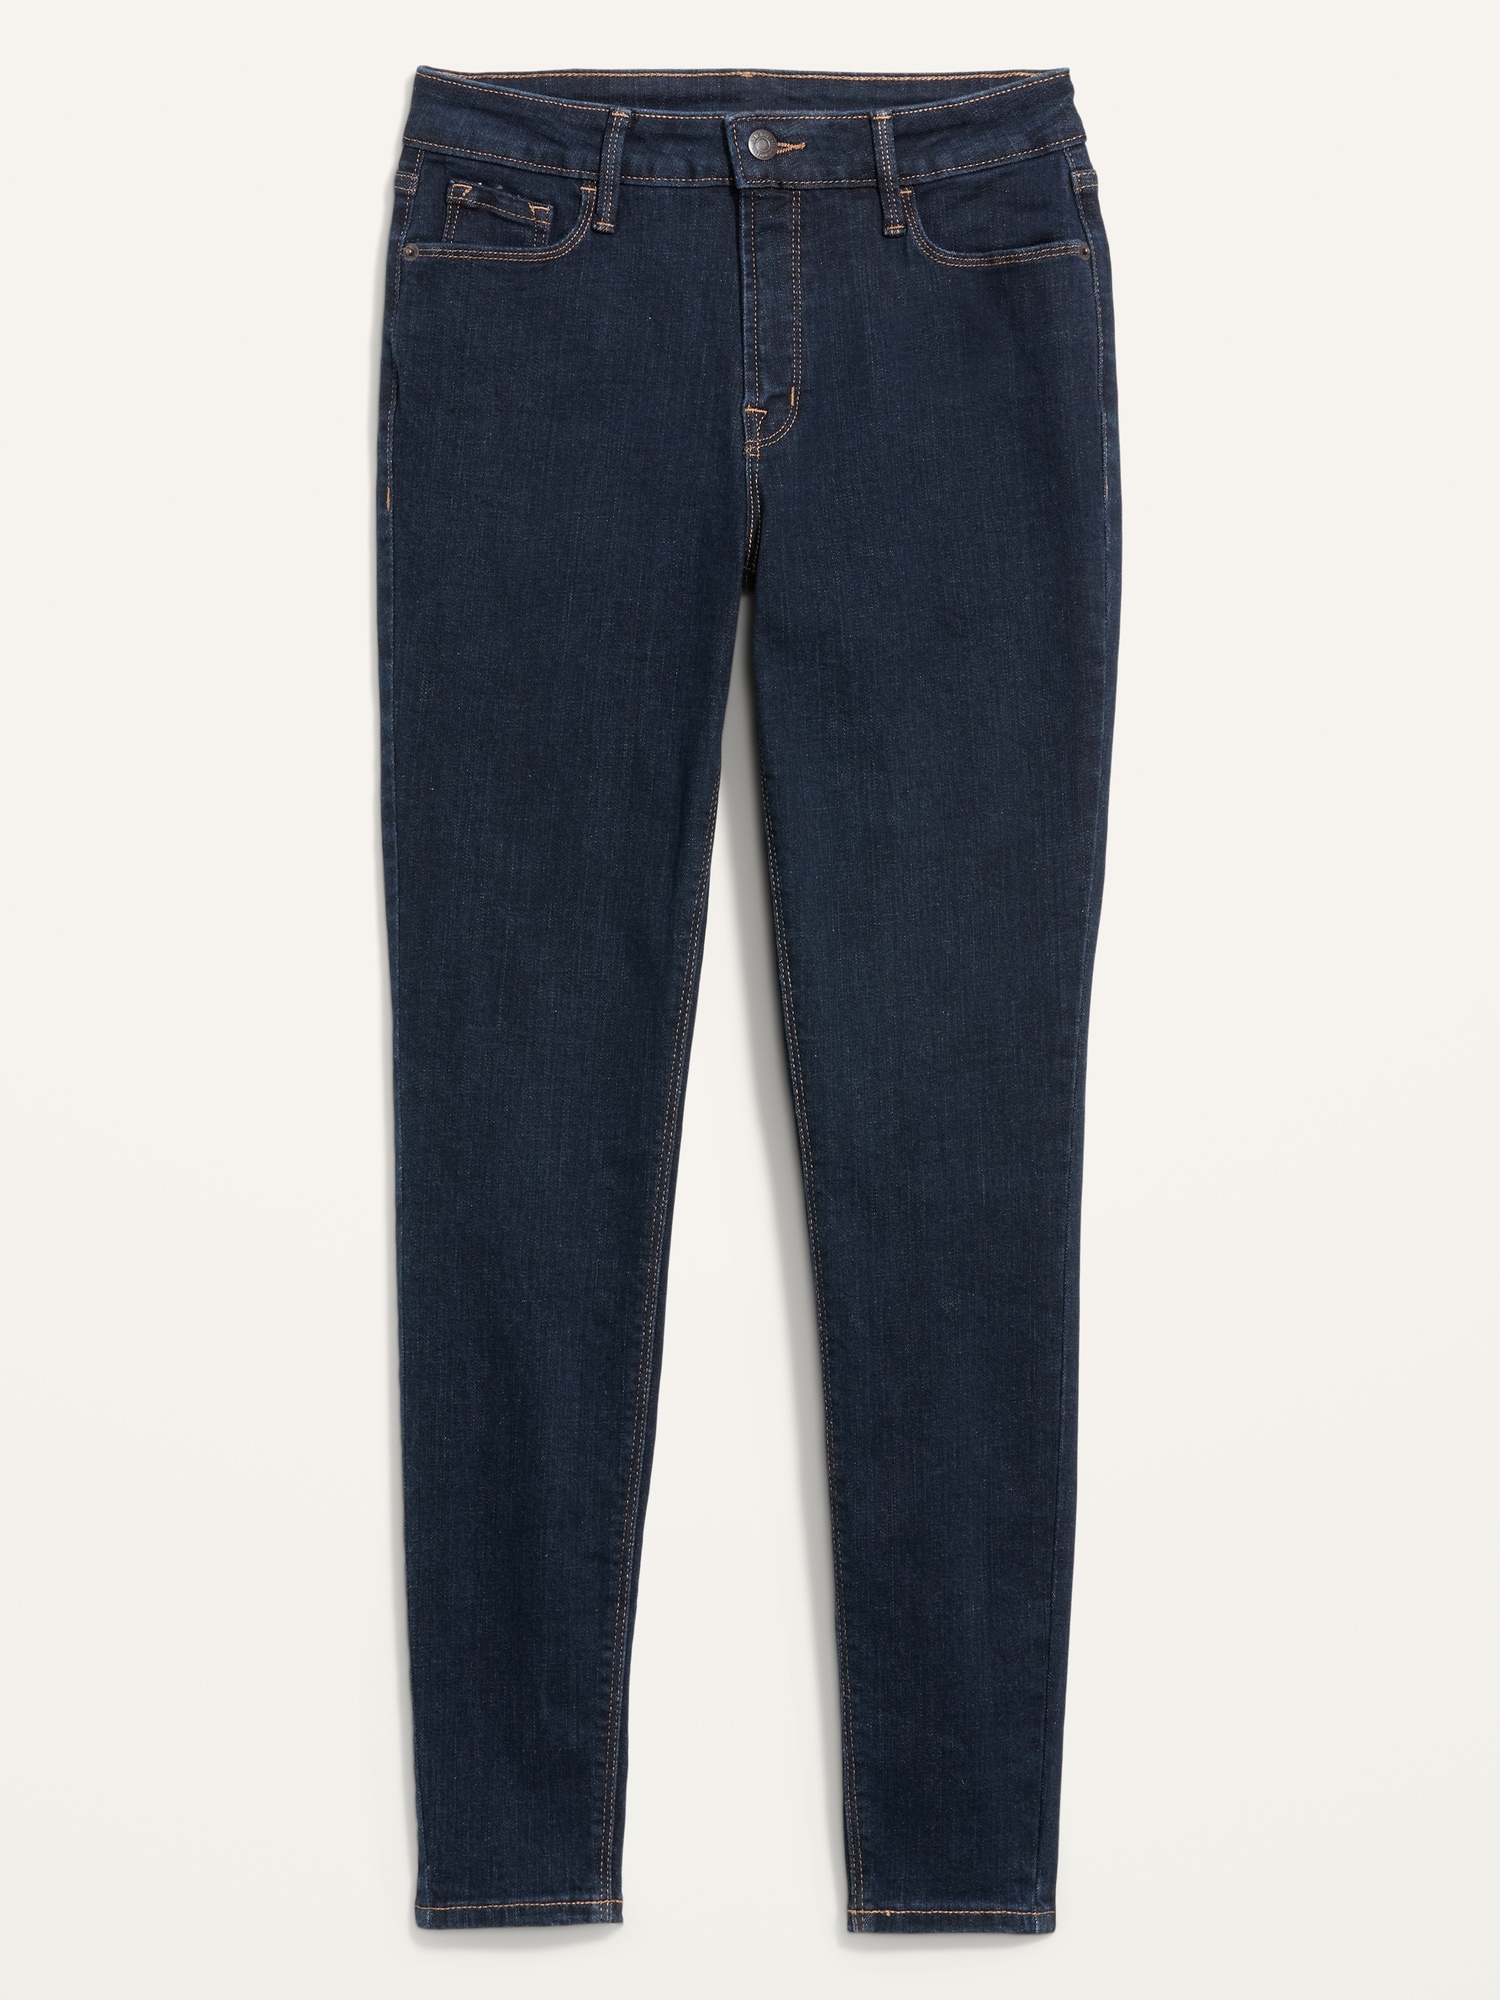 Buy Women Skinny Fit Ankle Length Dark Blue Jeans - Global Republic-atpcosmetics.com.vn